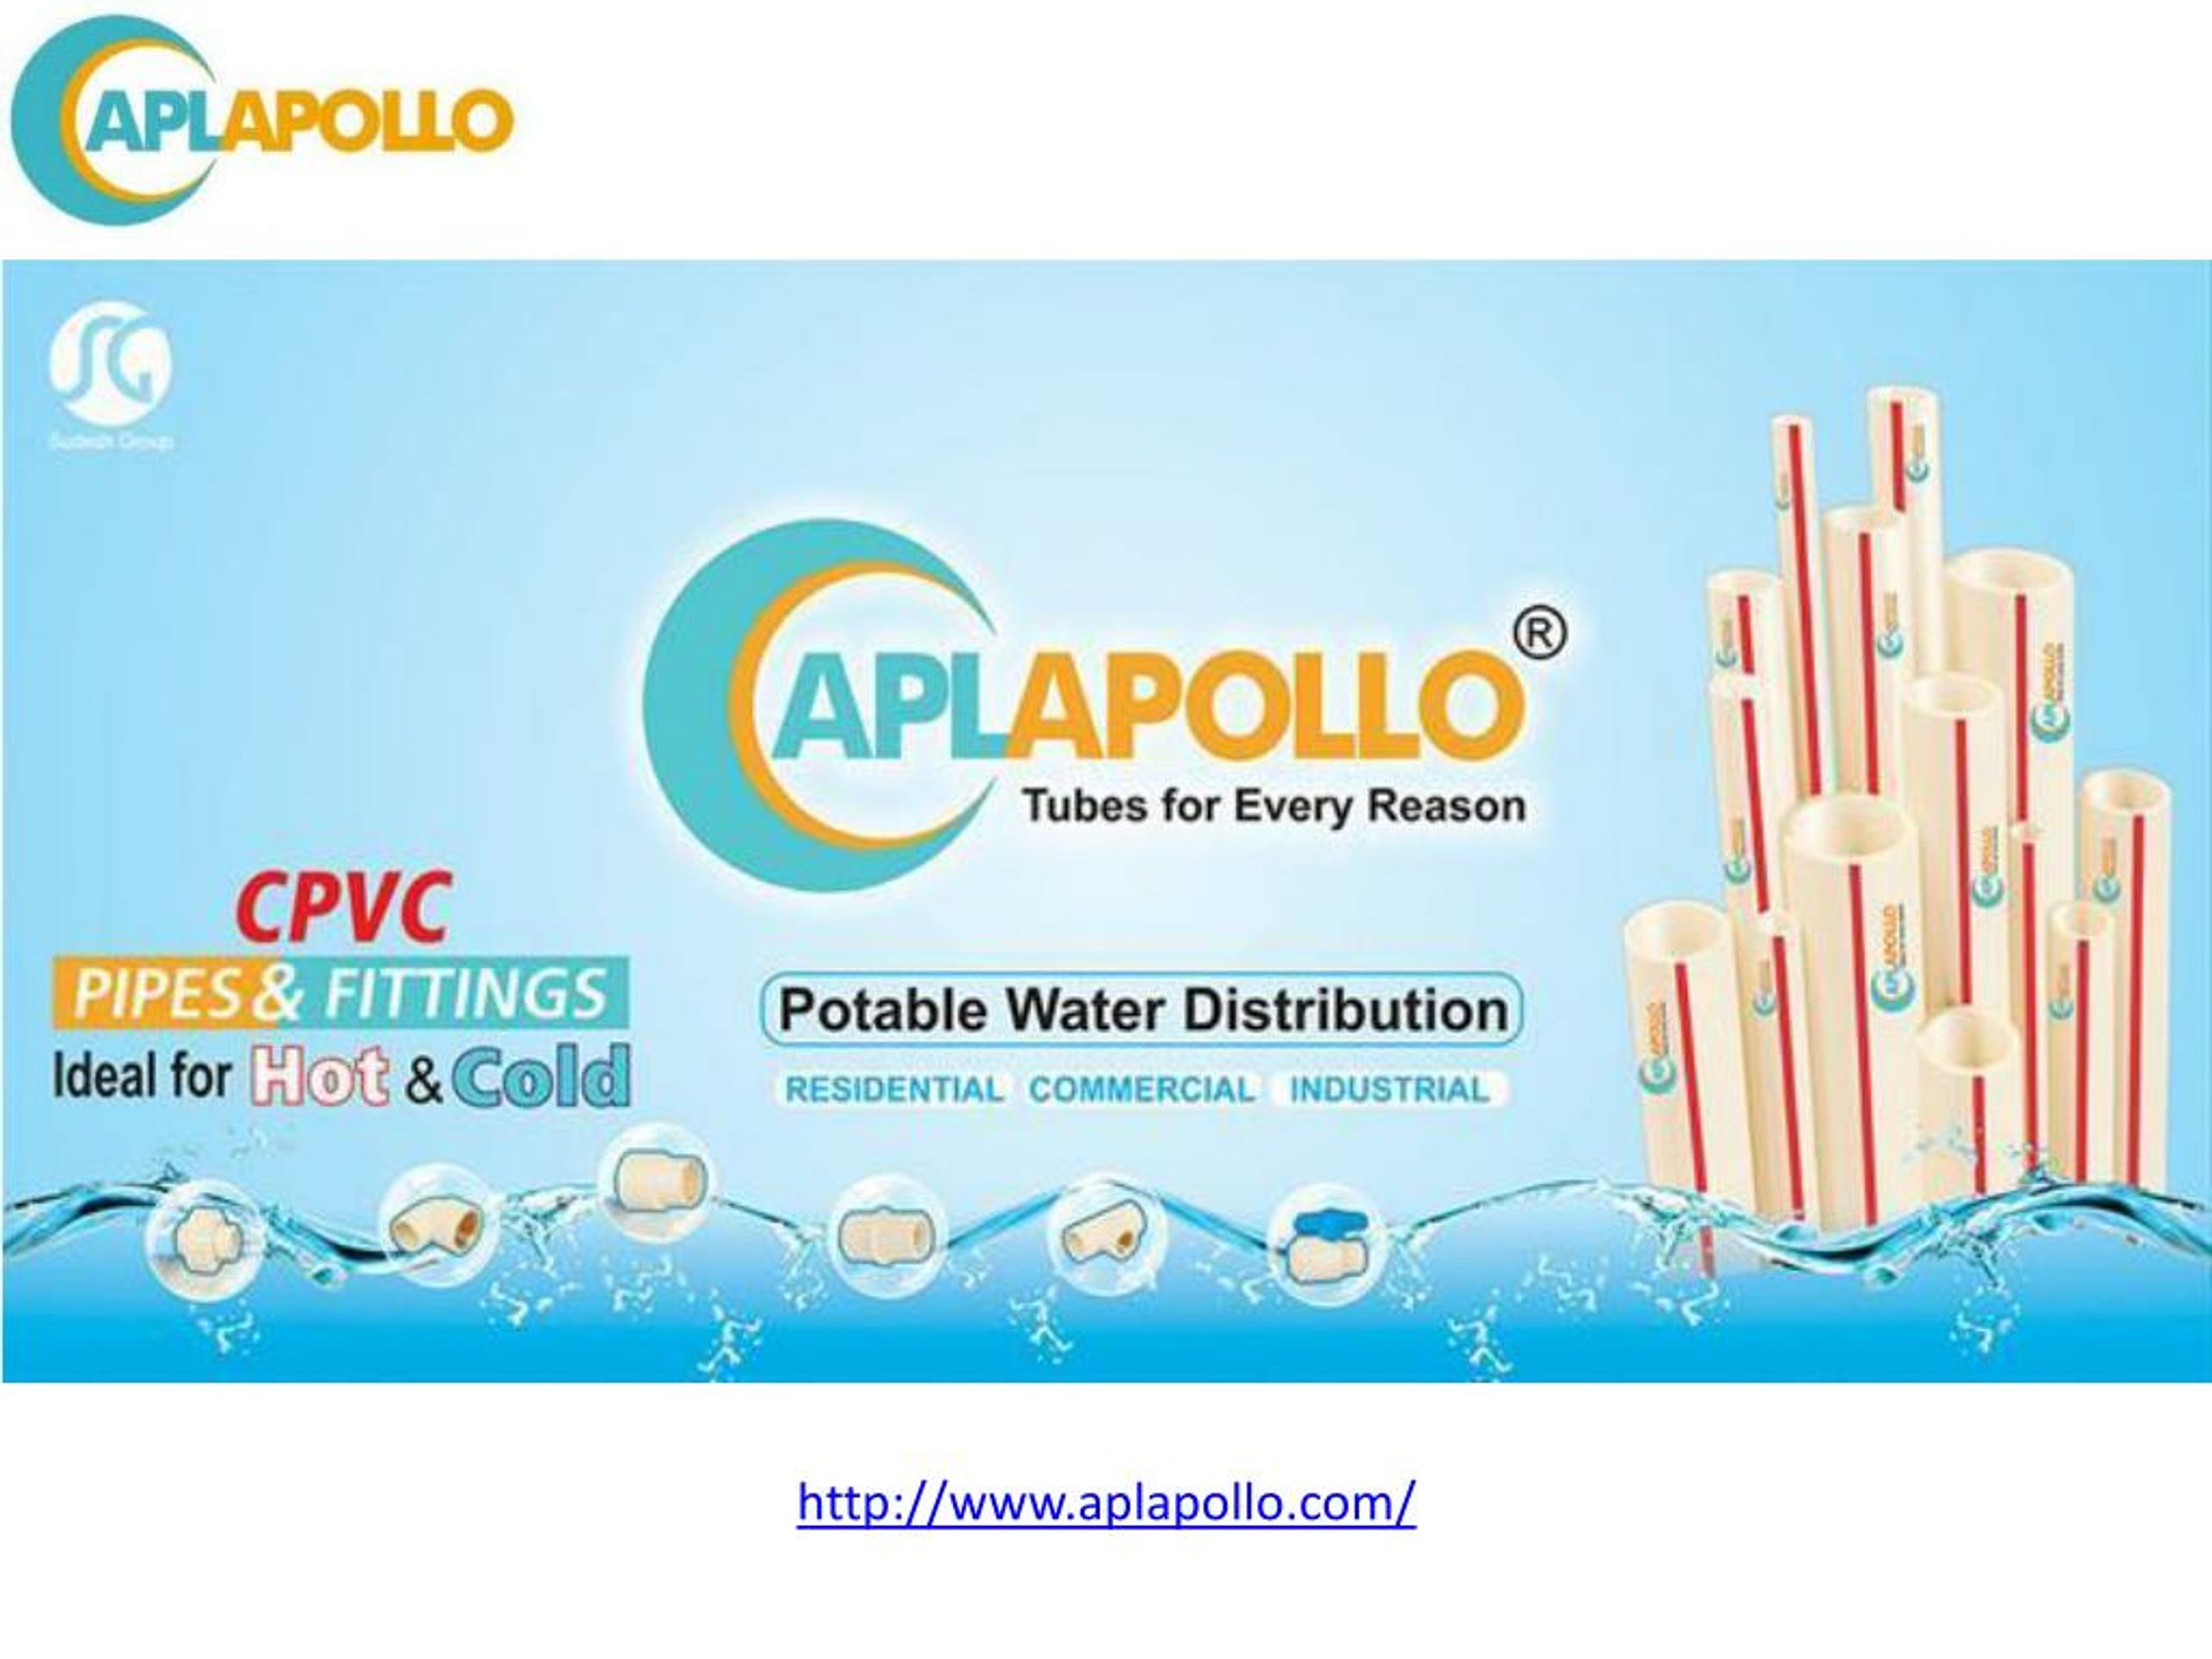 Catalogue - Apollo Pipes Limited in Noida Sector 136, Noida - Justdial